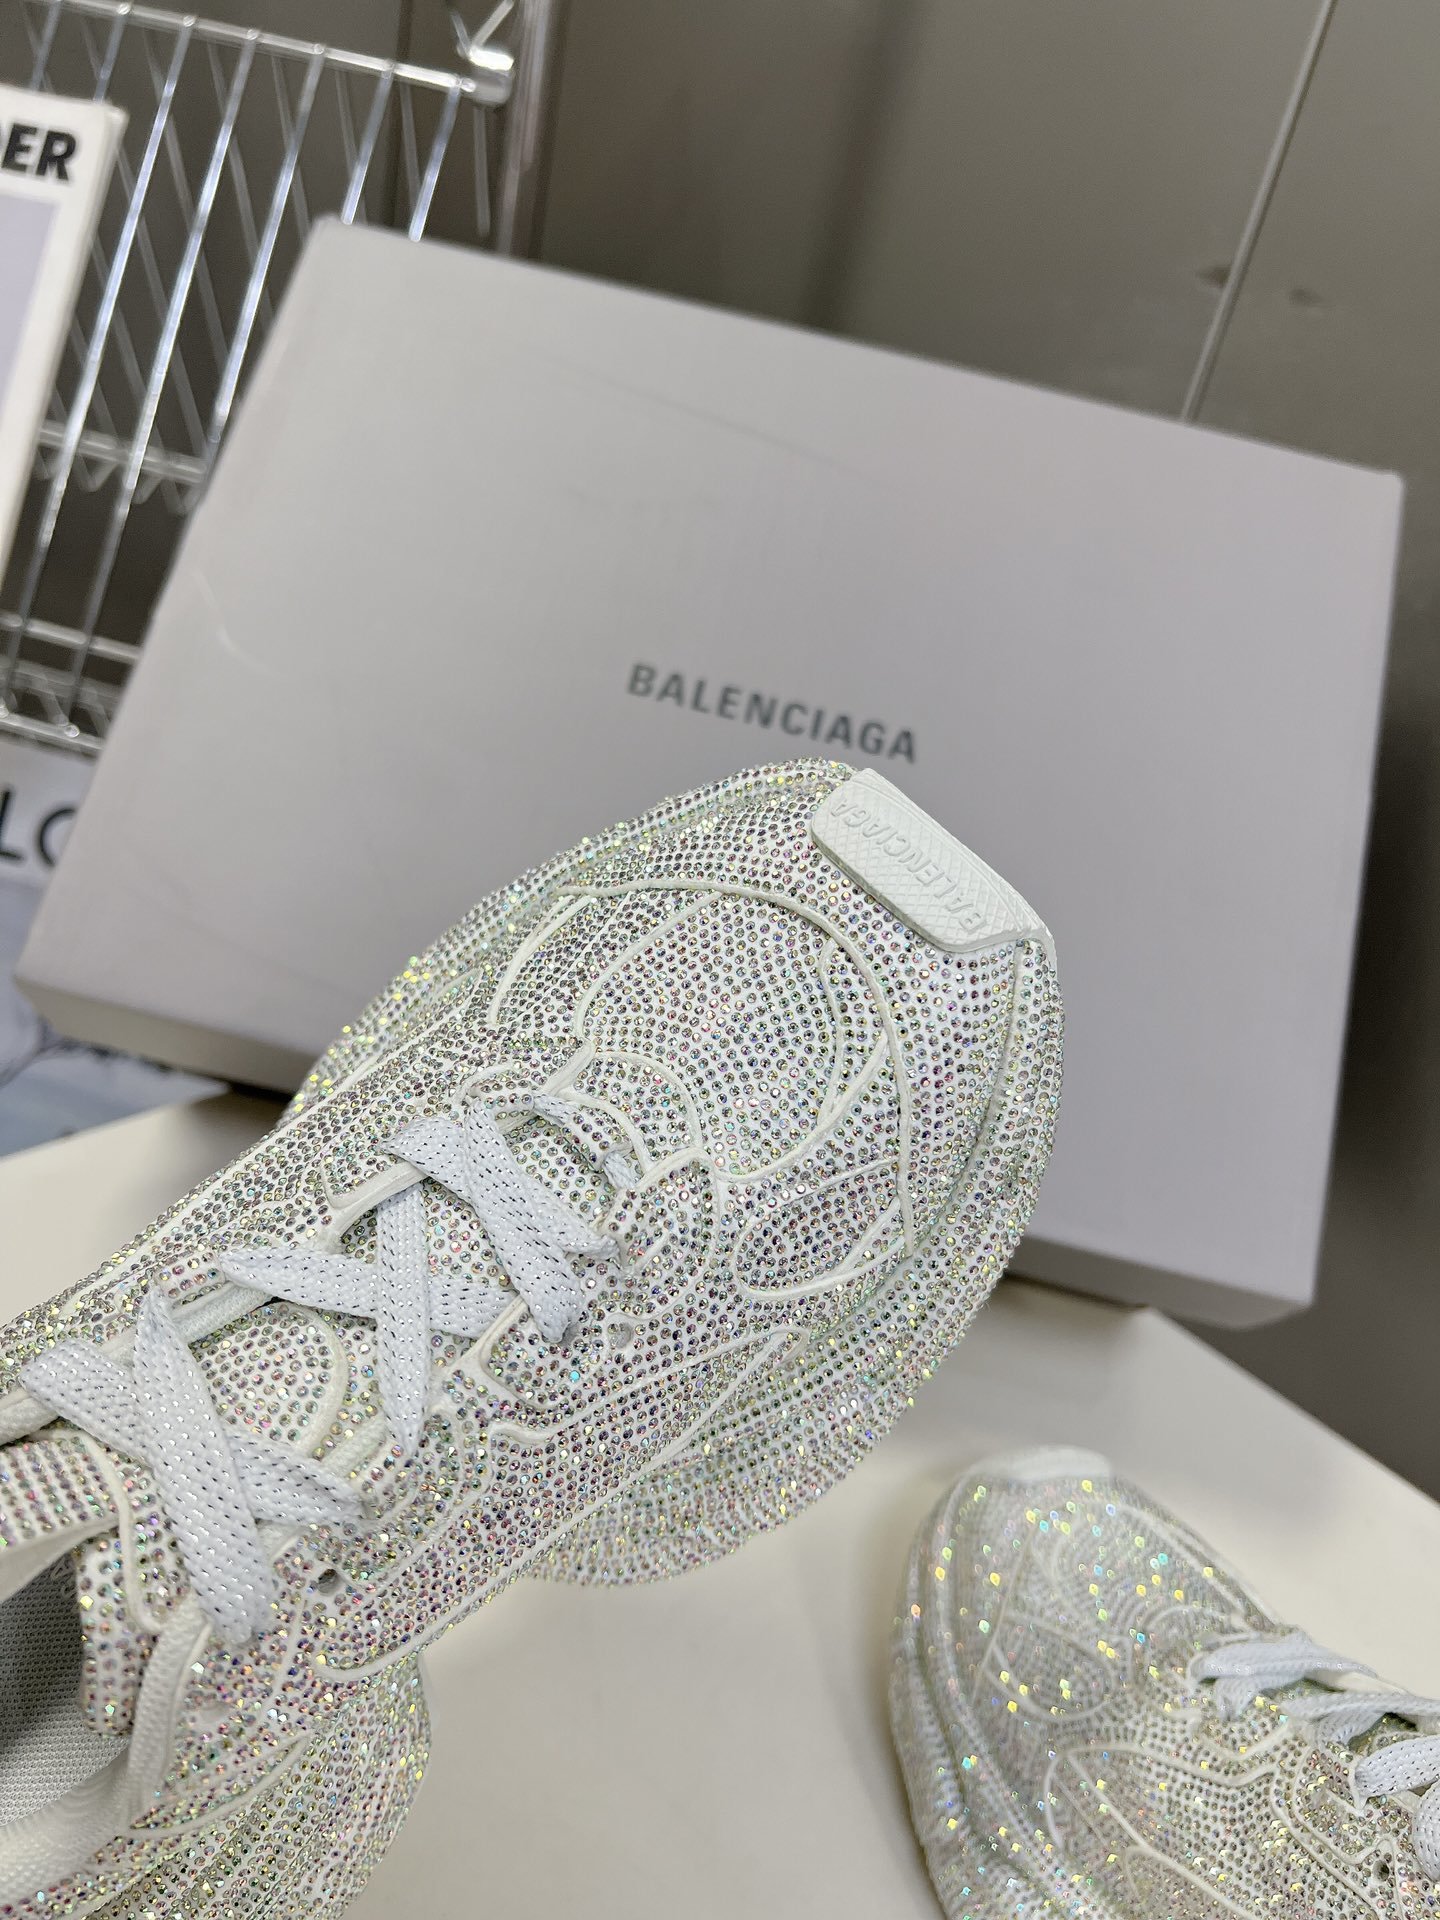 BALENCIAGA巴黎世家手工烫钻3xl系列复古休闲运动鞋系列推出探索时尚界对于原创与挪用的概念以全新